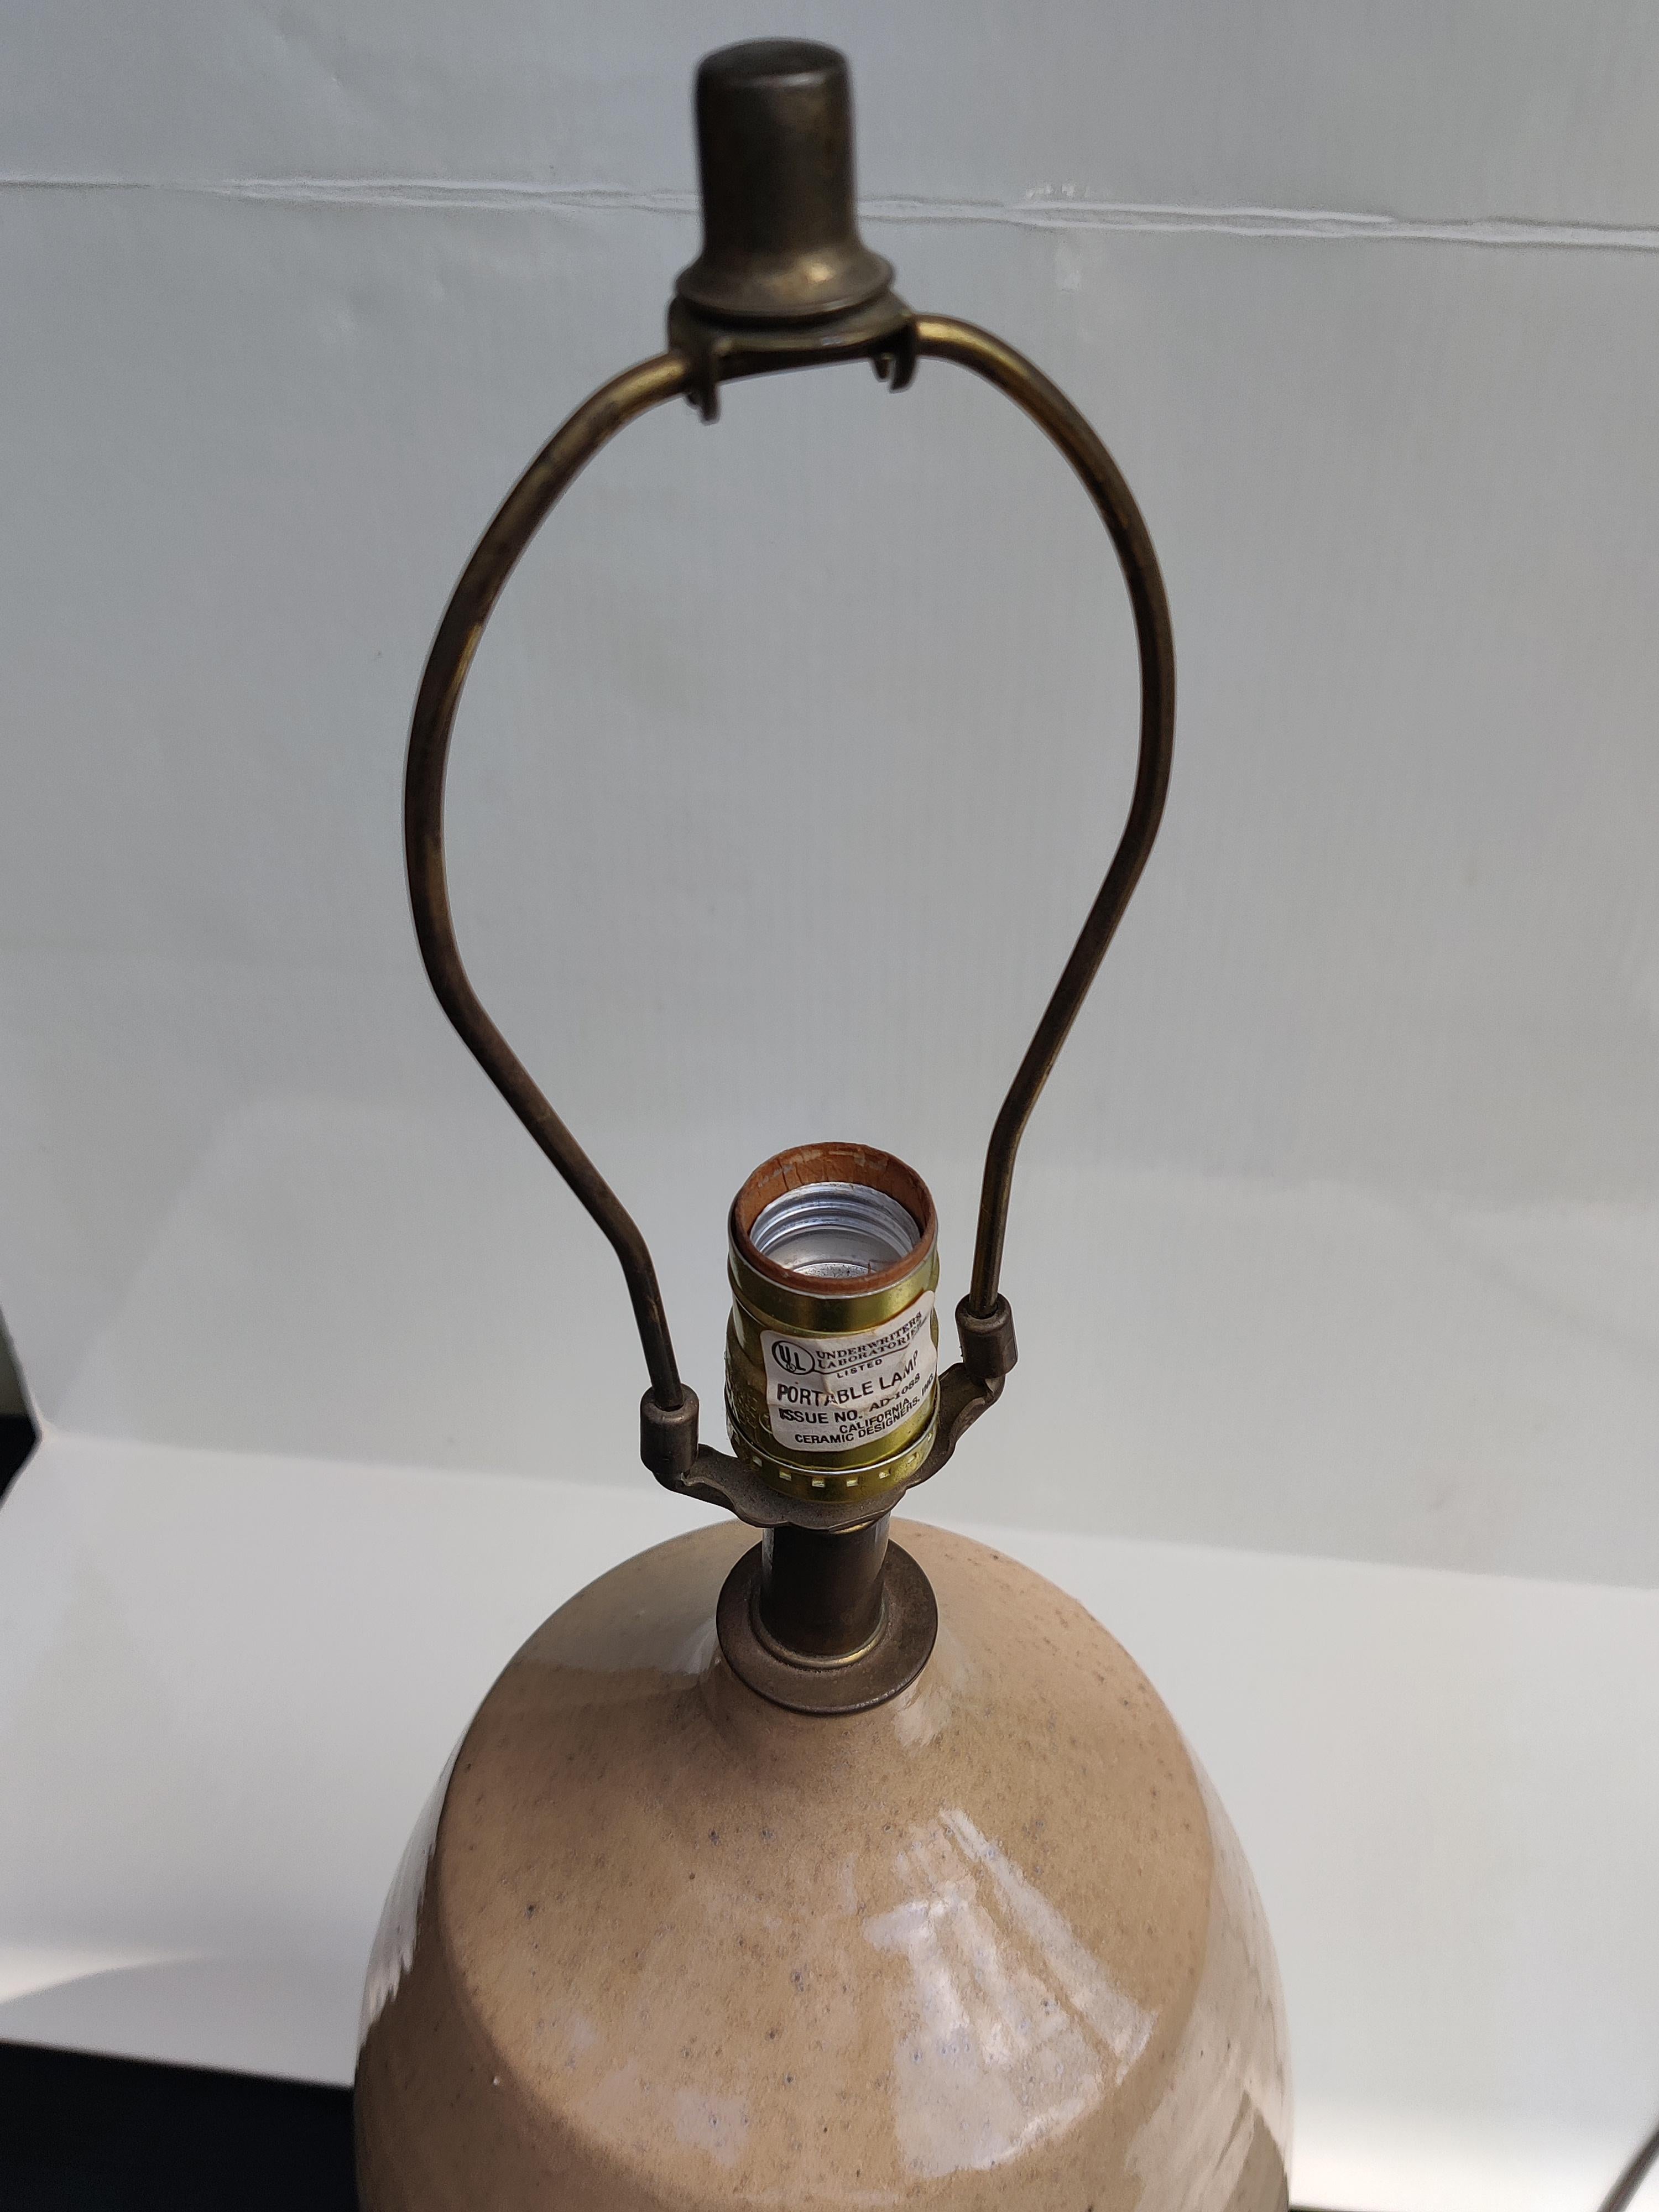 Mid Century Stoneware Lamp.
Made by California Ceramic Designer. 
Stoneware incised pattern.
3 way socket.  Manufacturer mark on socket. 
Base 7.5